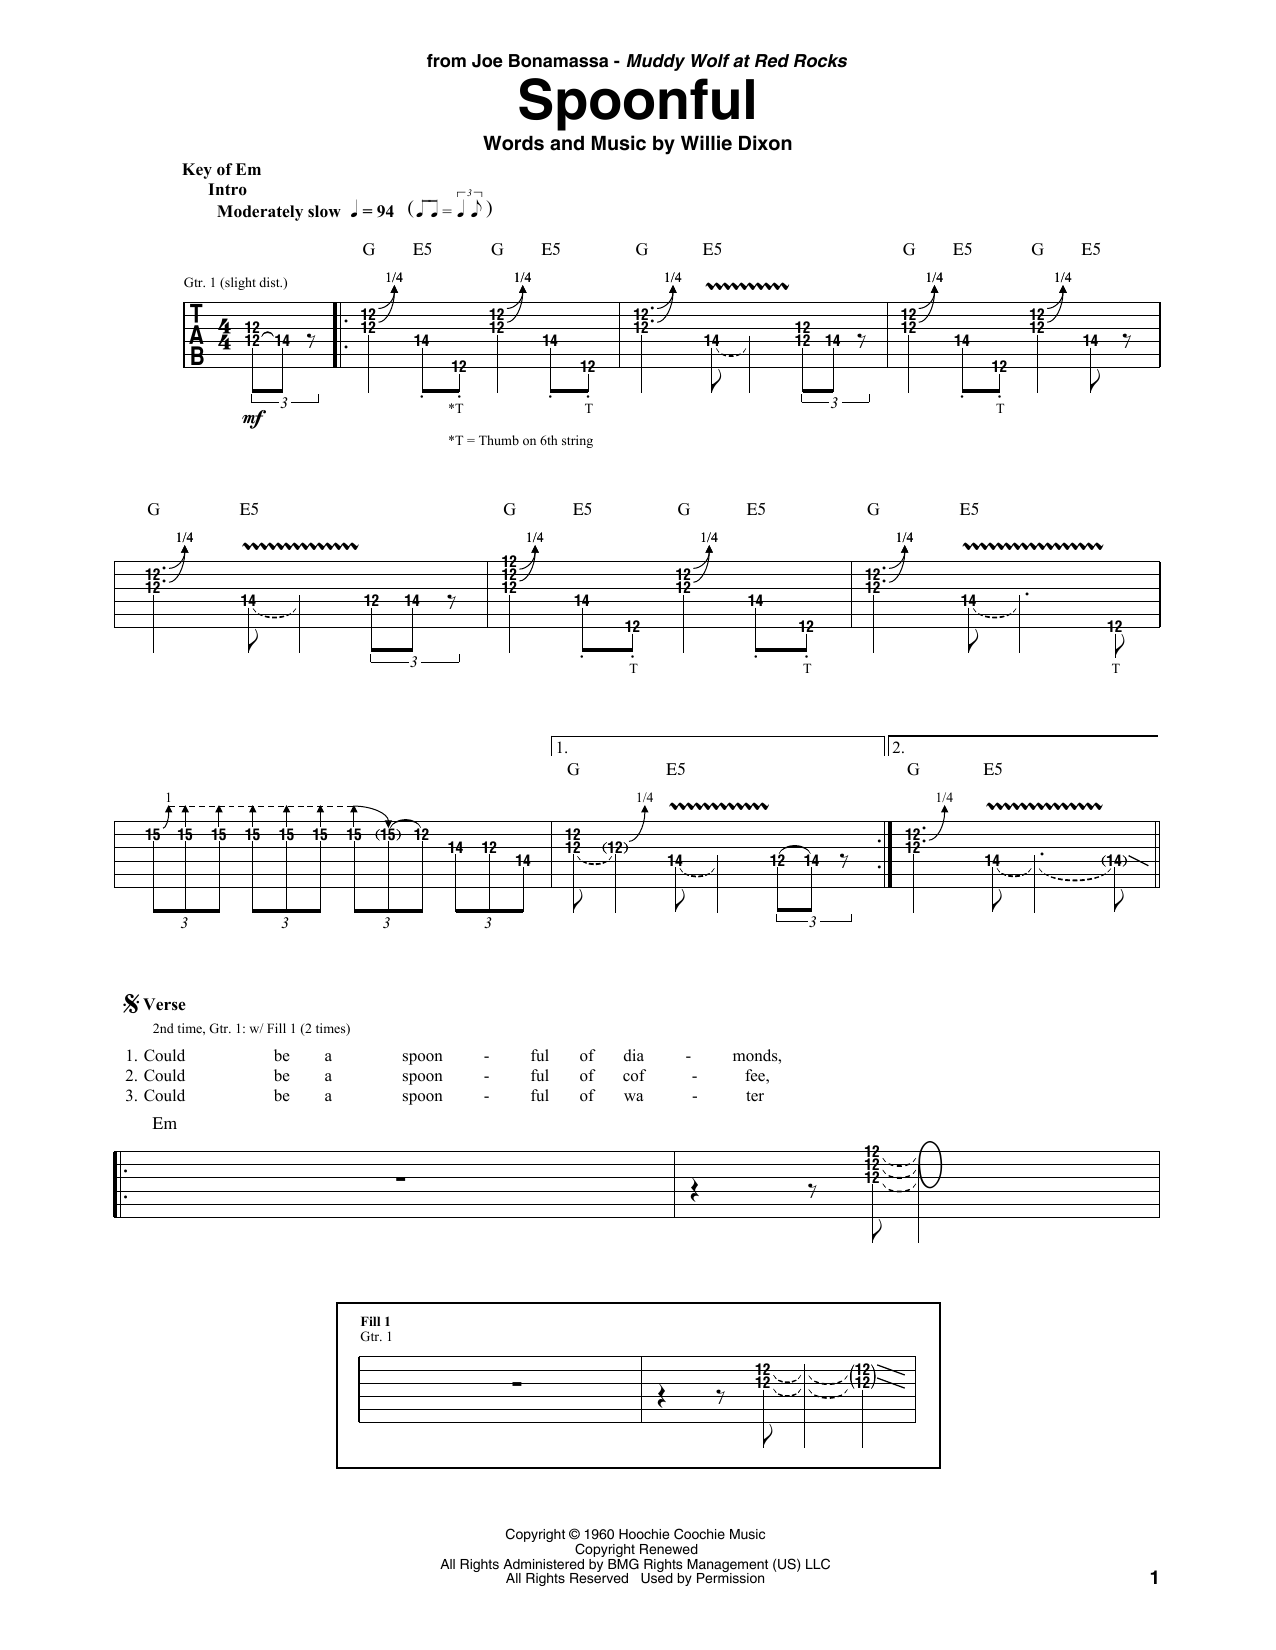 Download Joe Bonamassa Spoonful Sheet Music and learn how to play Guitar Tab PDF digital score in minutes